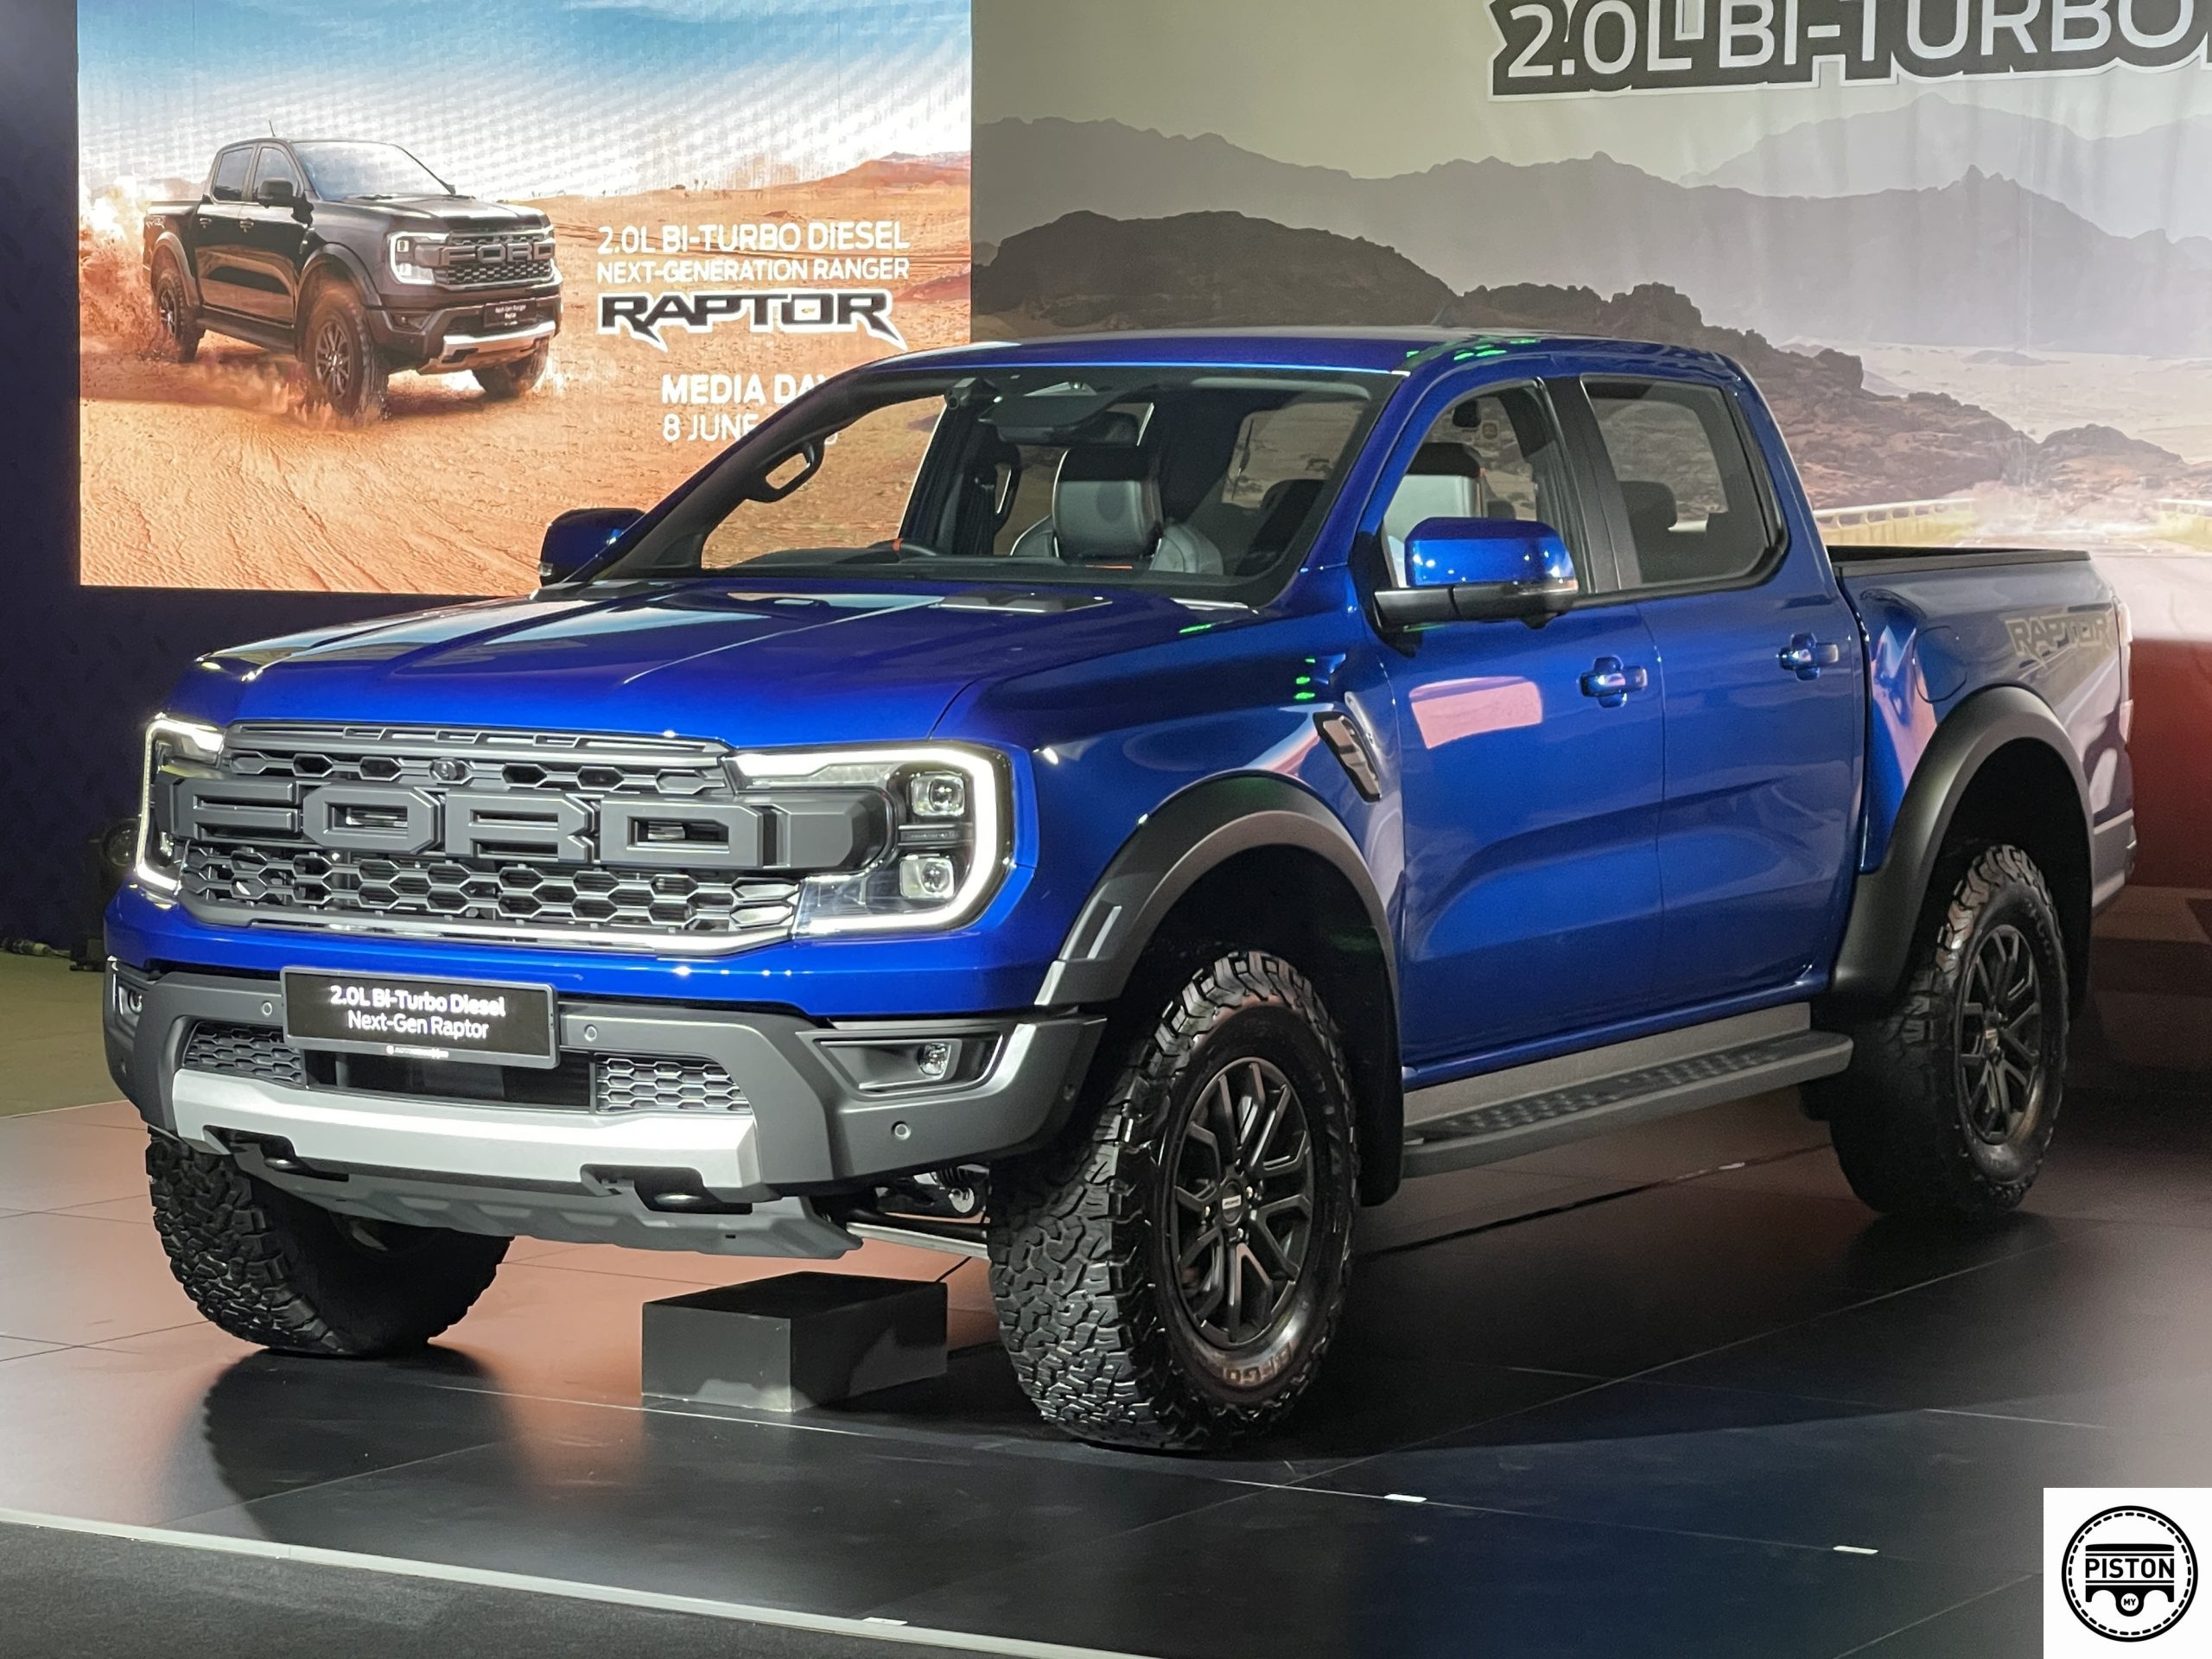 Ford launches Next-Gen Ranger Raptor 2.0L Bi-Turbo Diesel